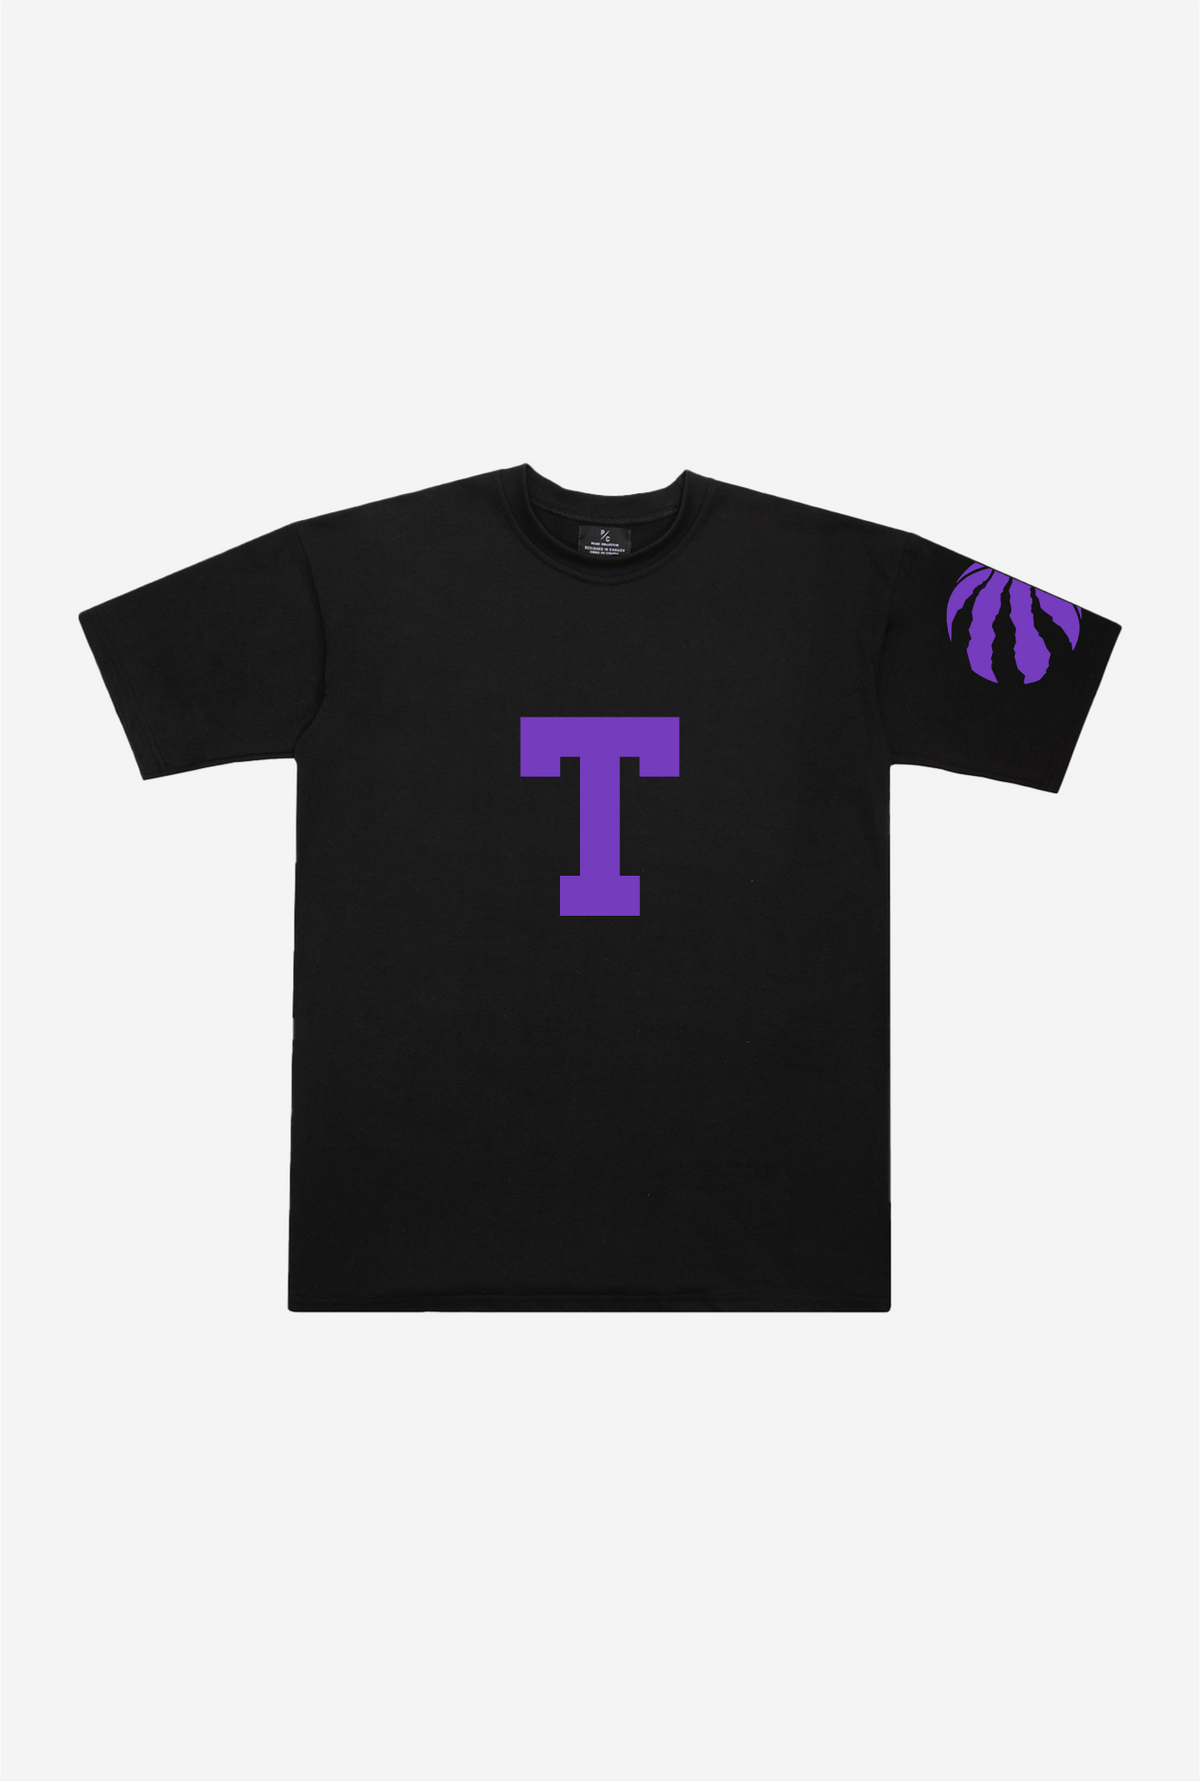 Toronto Raptors 'T' Heavyweight T-Shirt - Black